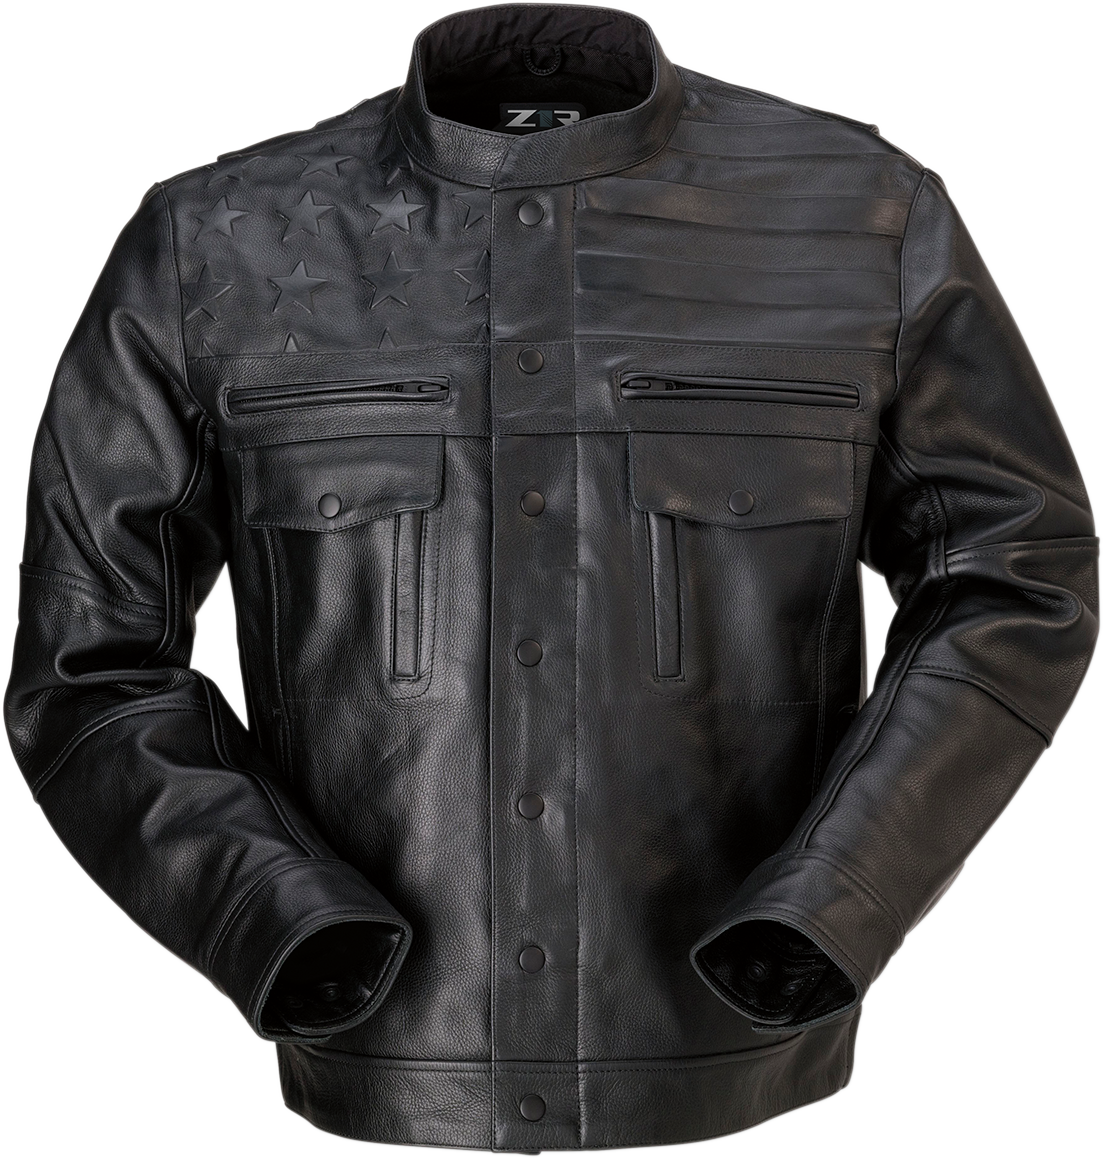 Z1R Deagle Leather Jacket - Black - Small 2810-3757